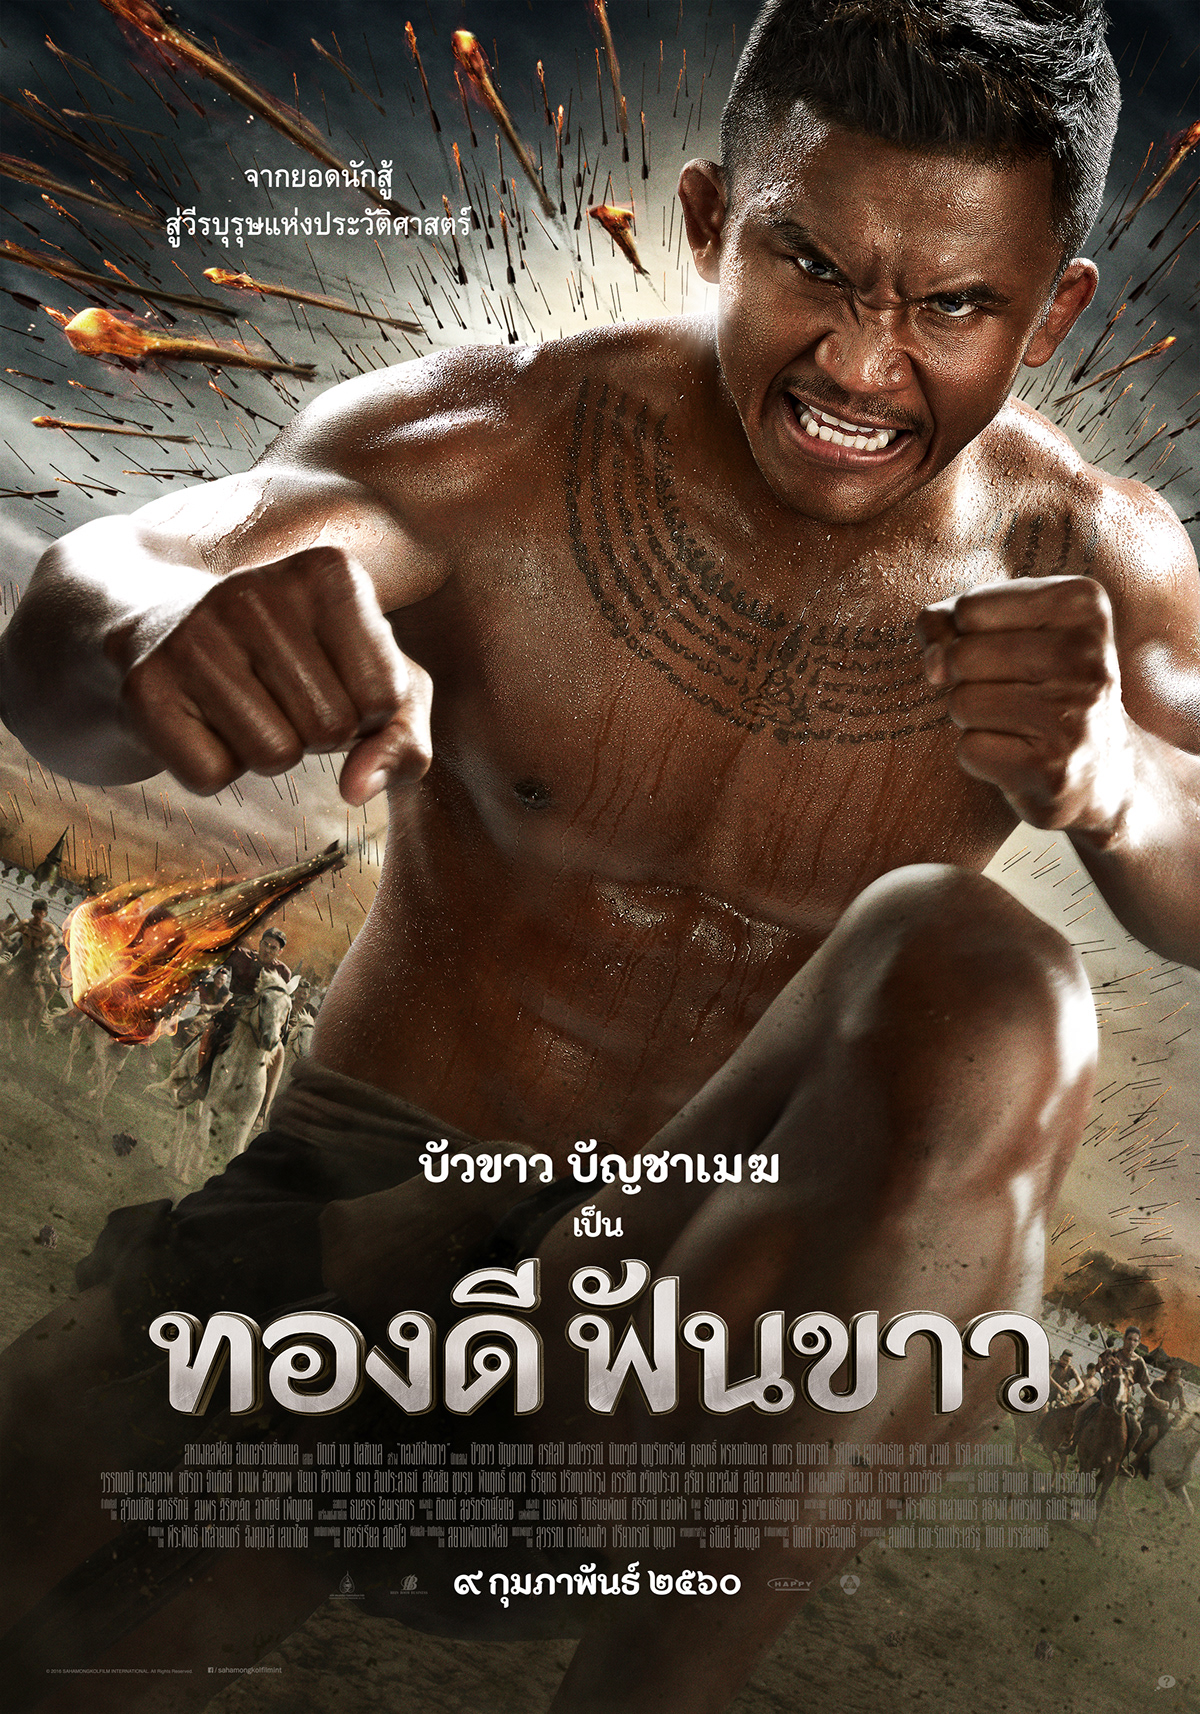 Fighter Hero historical keyart keyart poster movie poster portrait poster Sword warrior